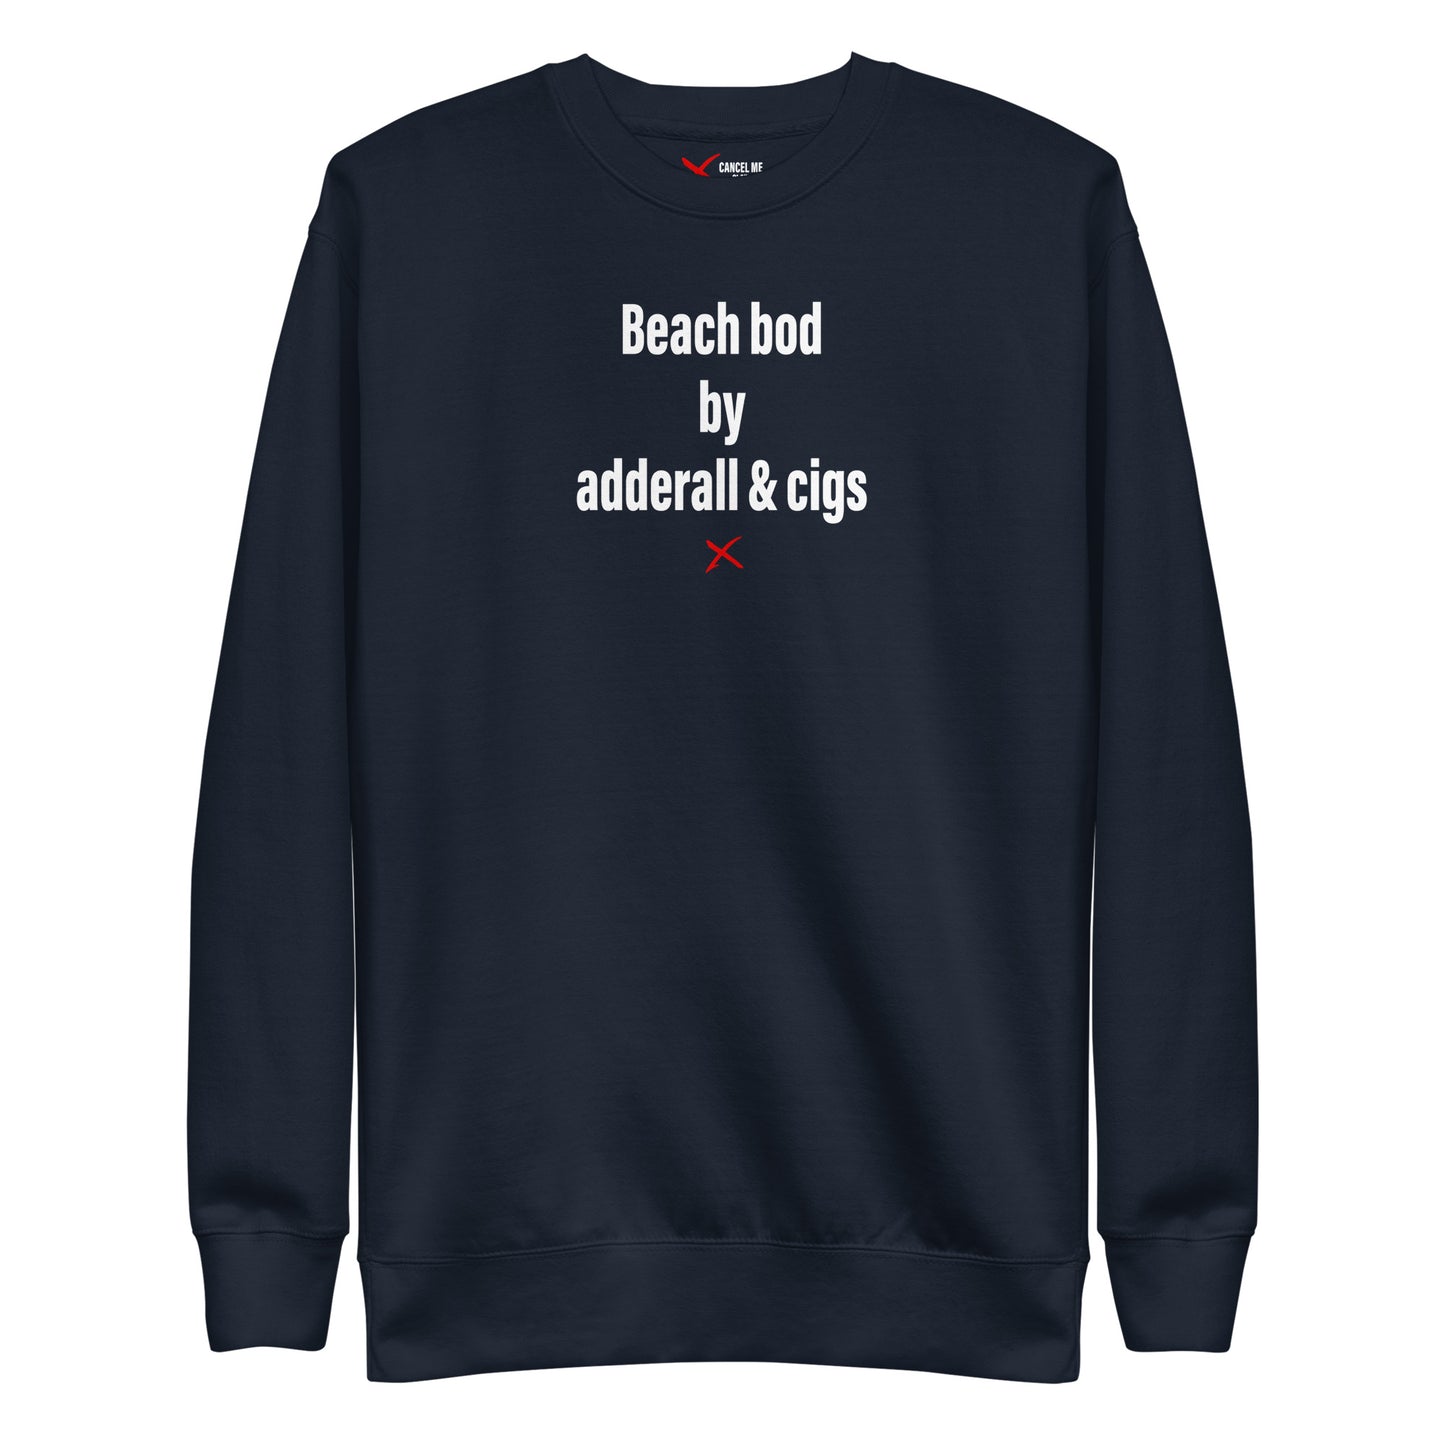 Beach bod by adderall & cigs - Sweatshirt